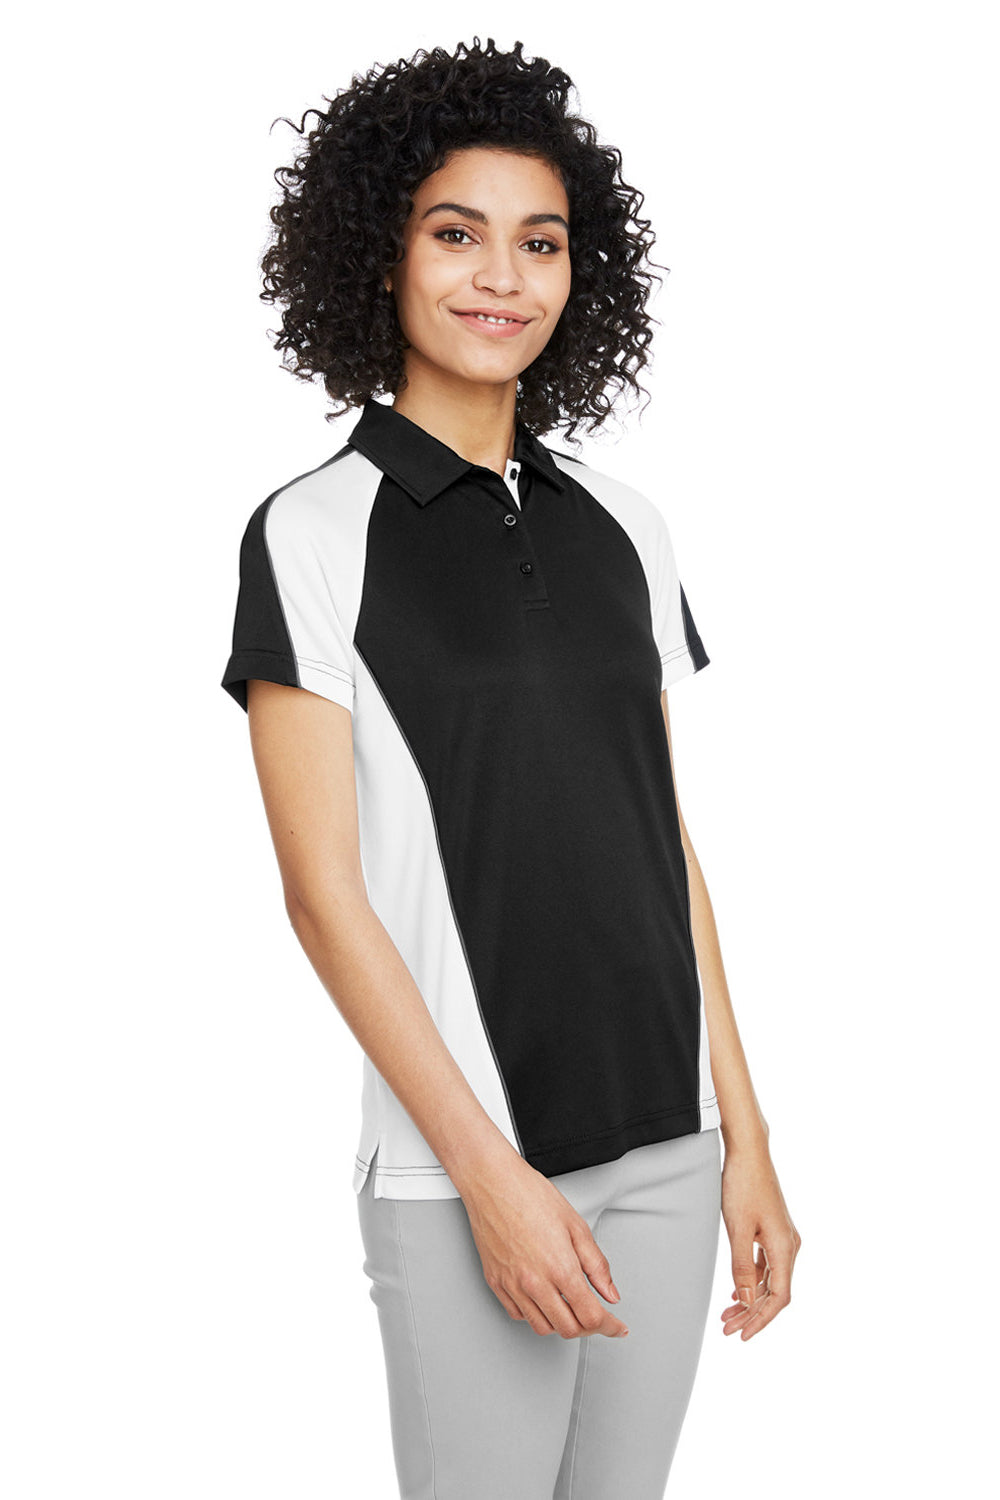 Harriton M385W Womens Advantage Performance Moisture Wicking Colorblock Short Sleeve Polo Shirt Black/White 3Q